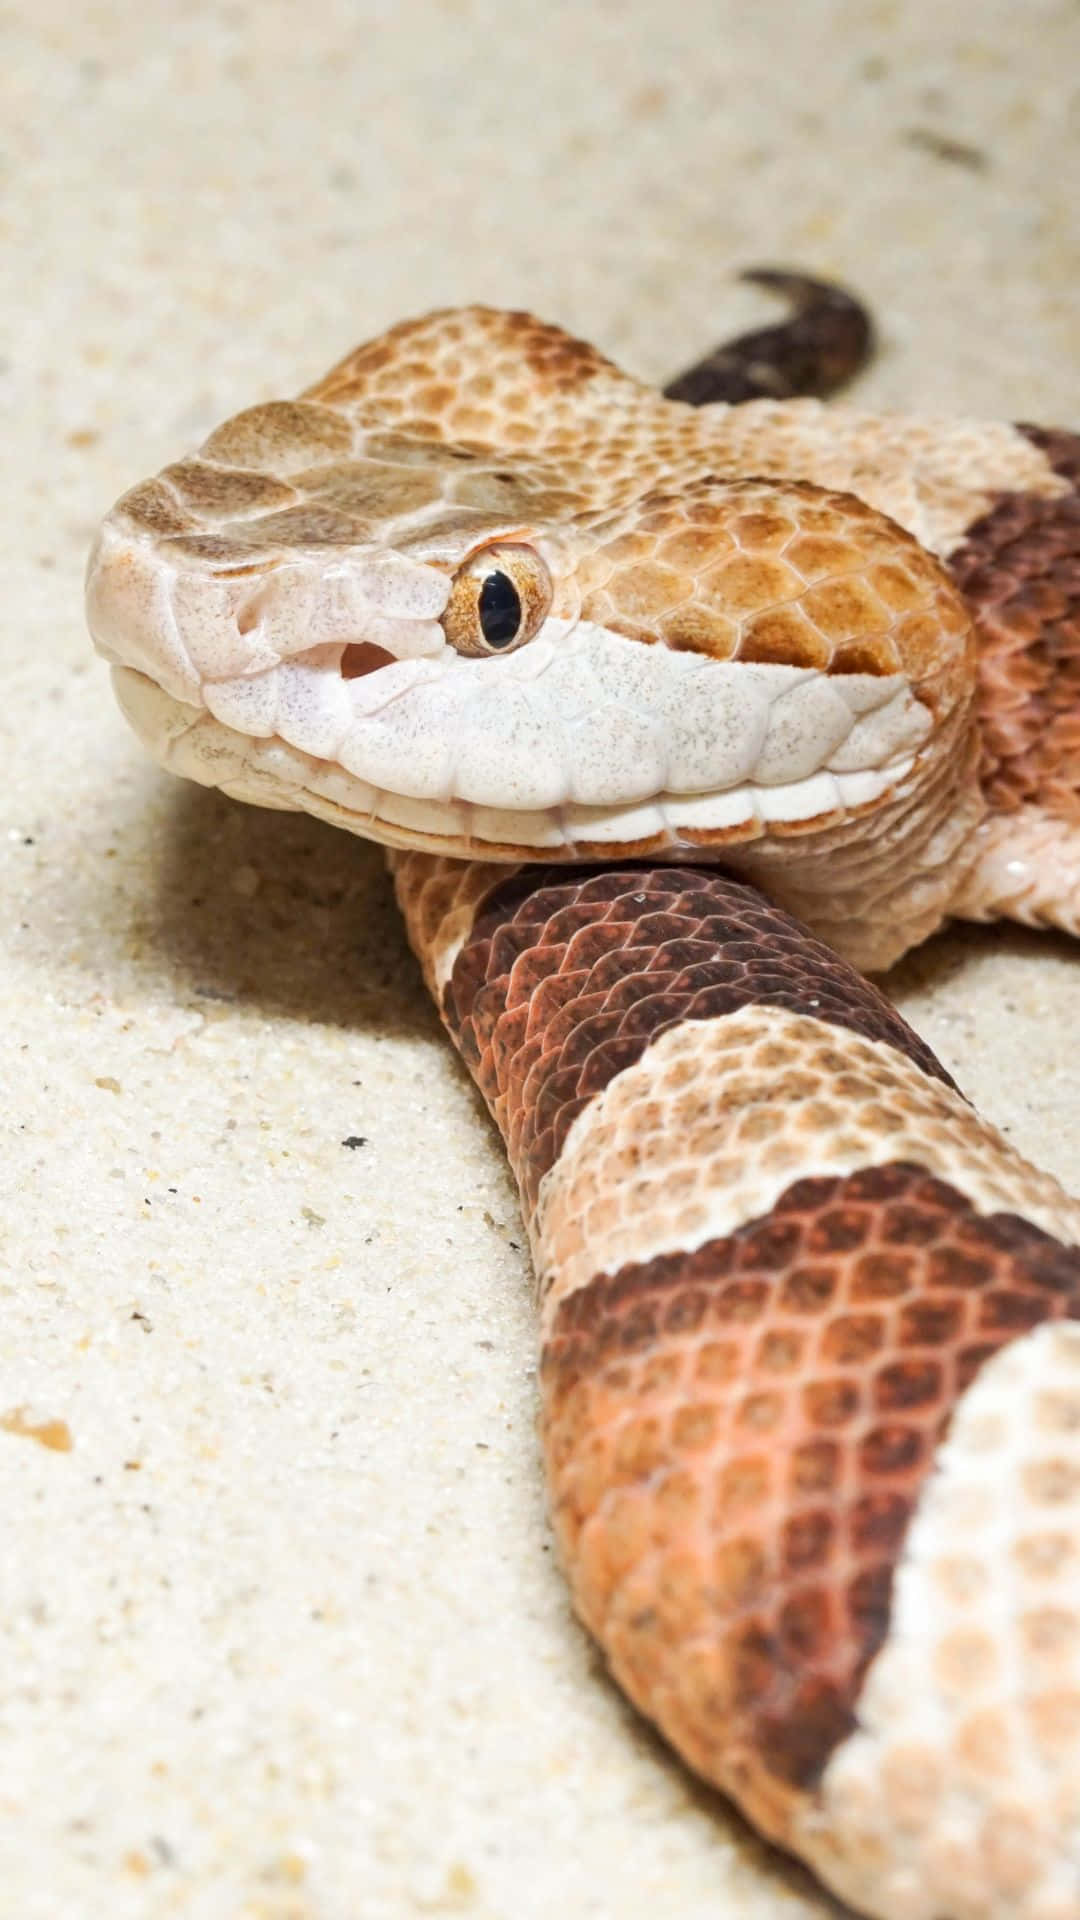 “A Slithering Snake in Its Natural Habitat” Wallpaper